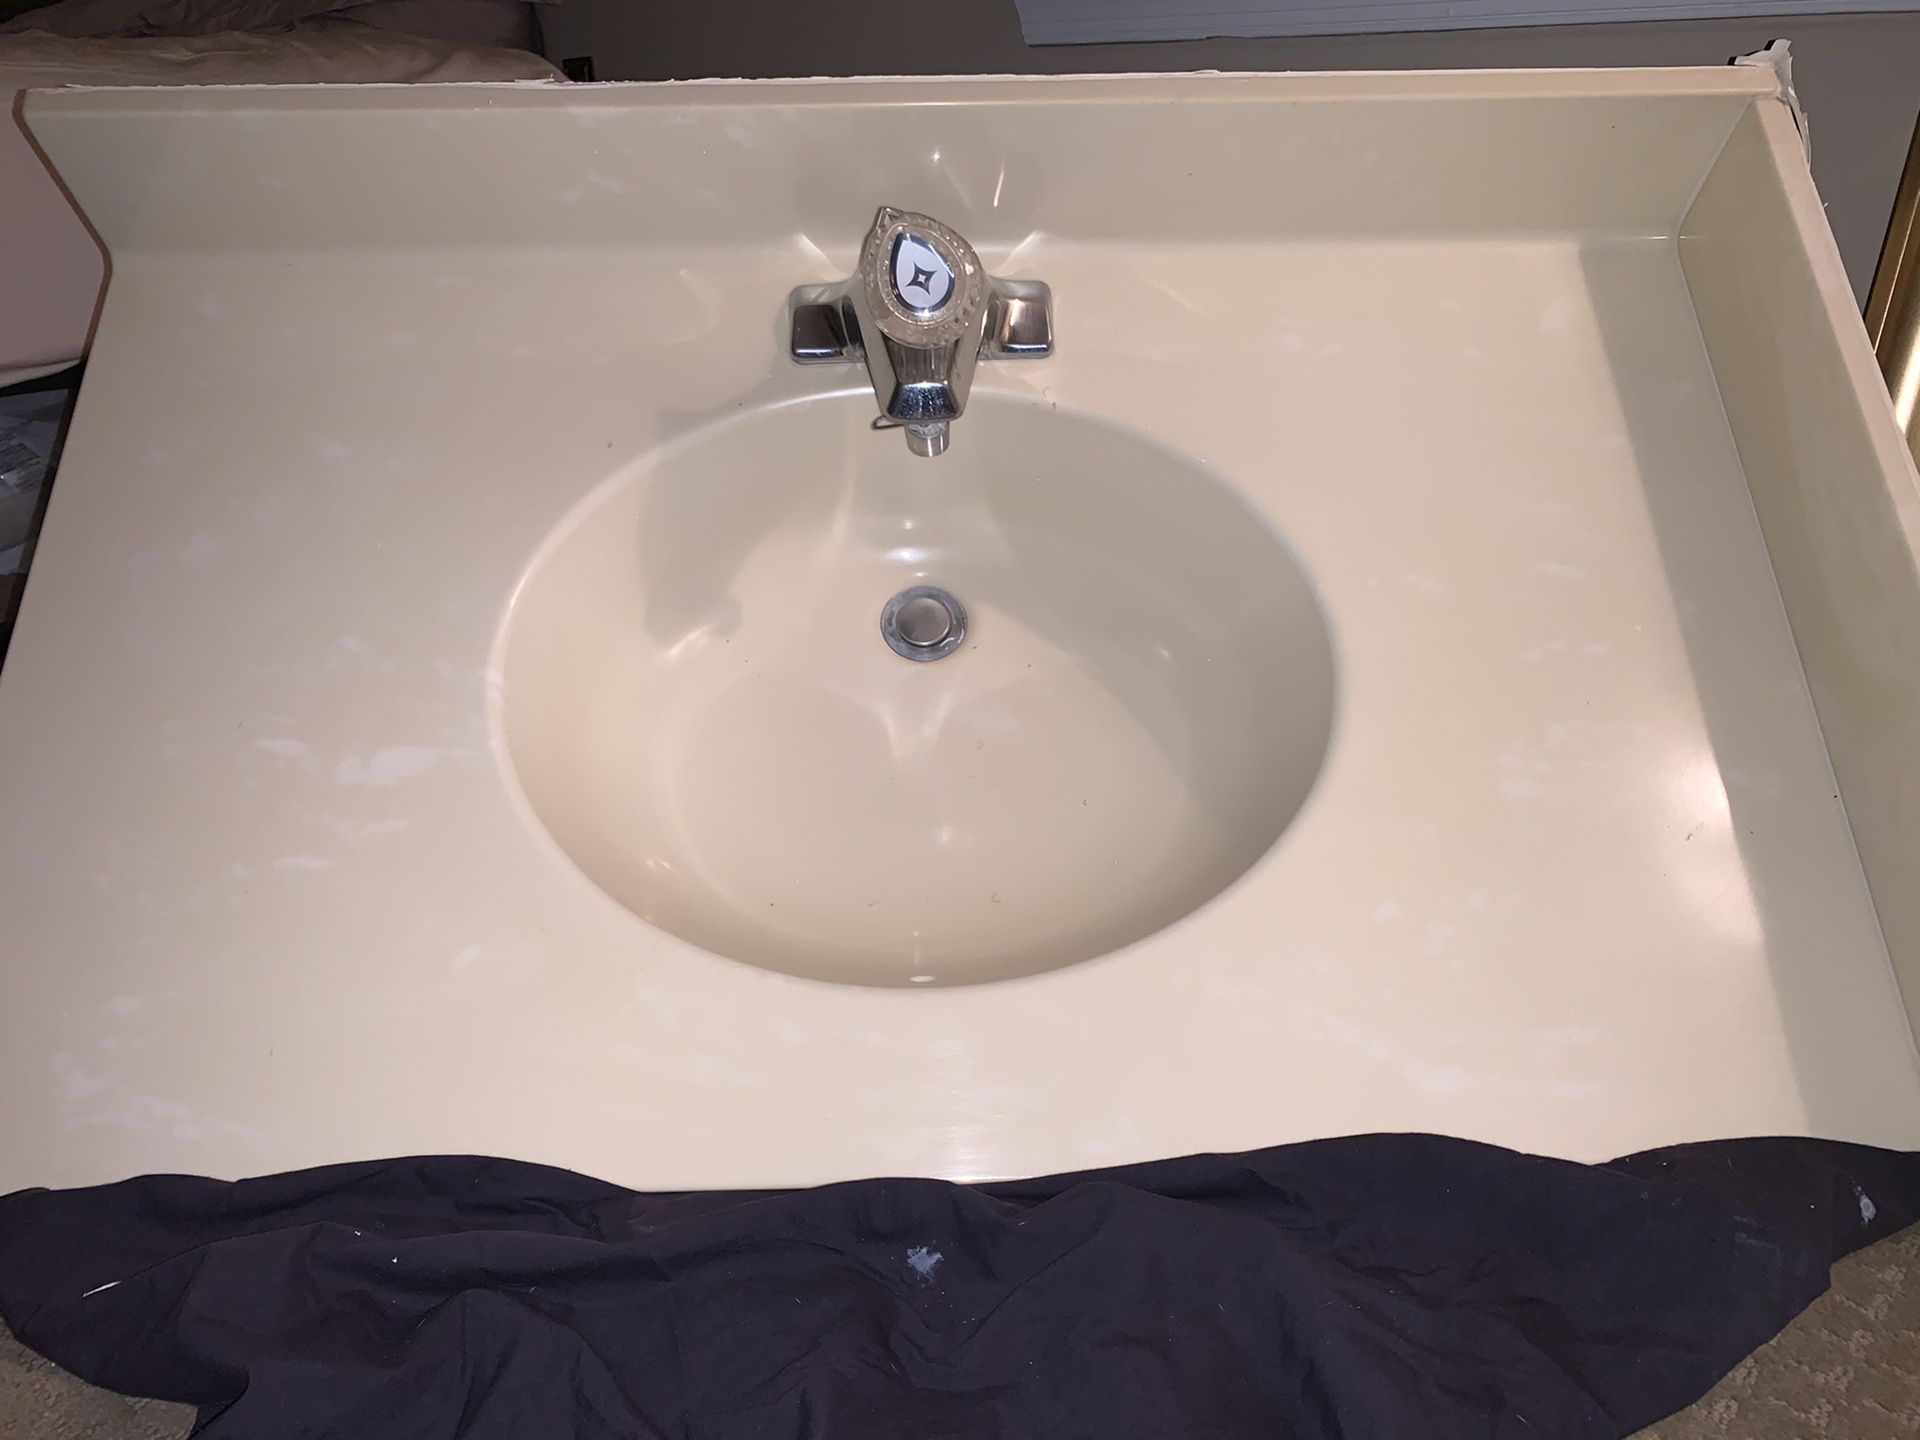 Bathroom vanity top and faucet